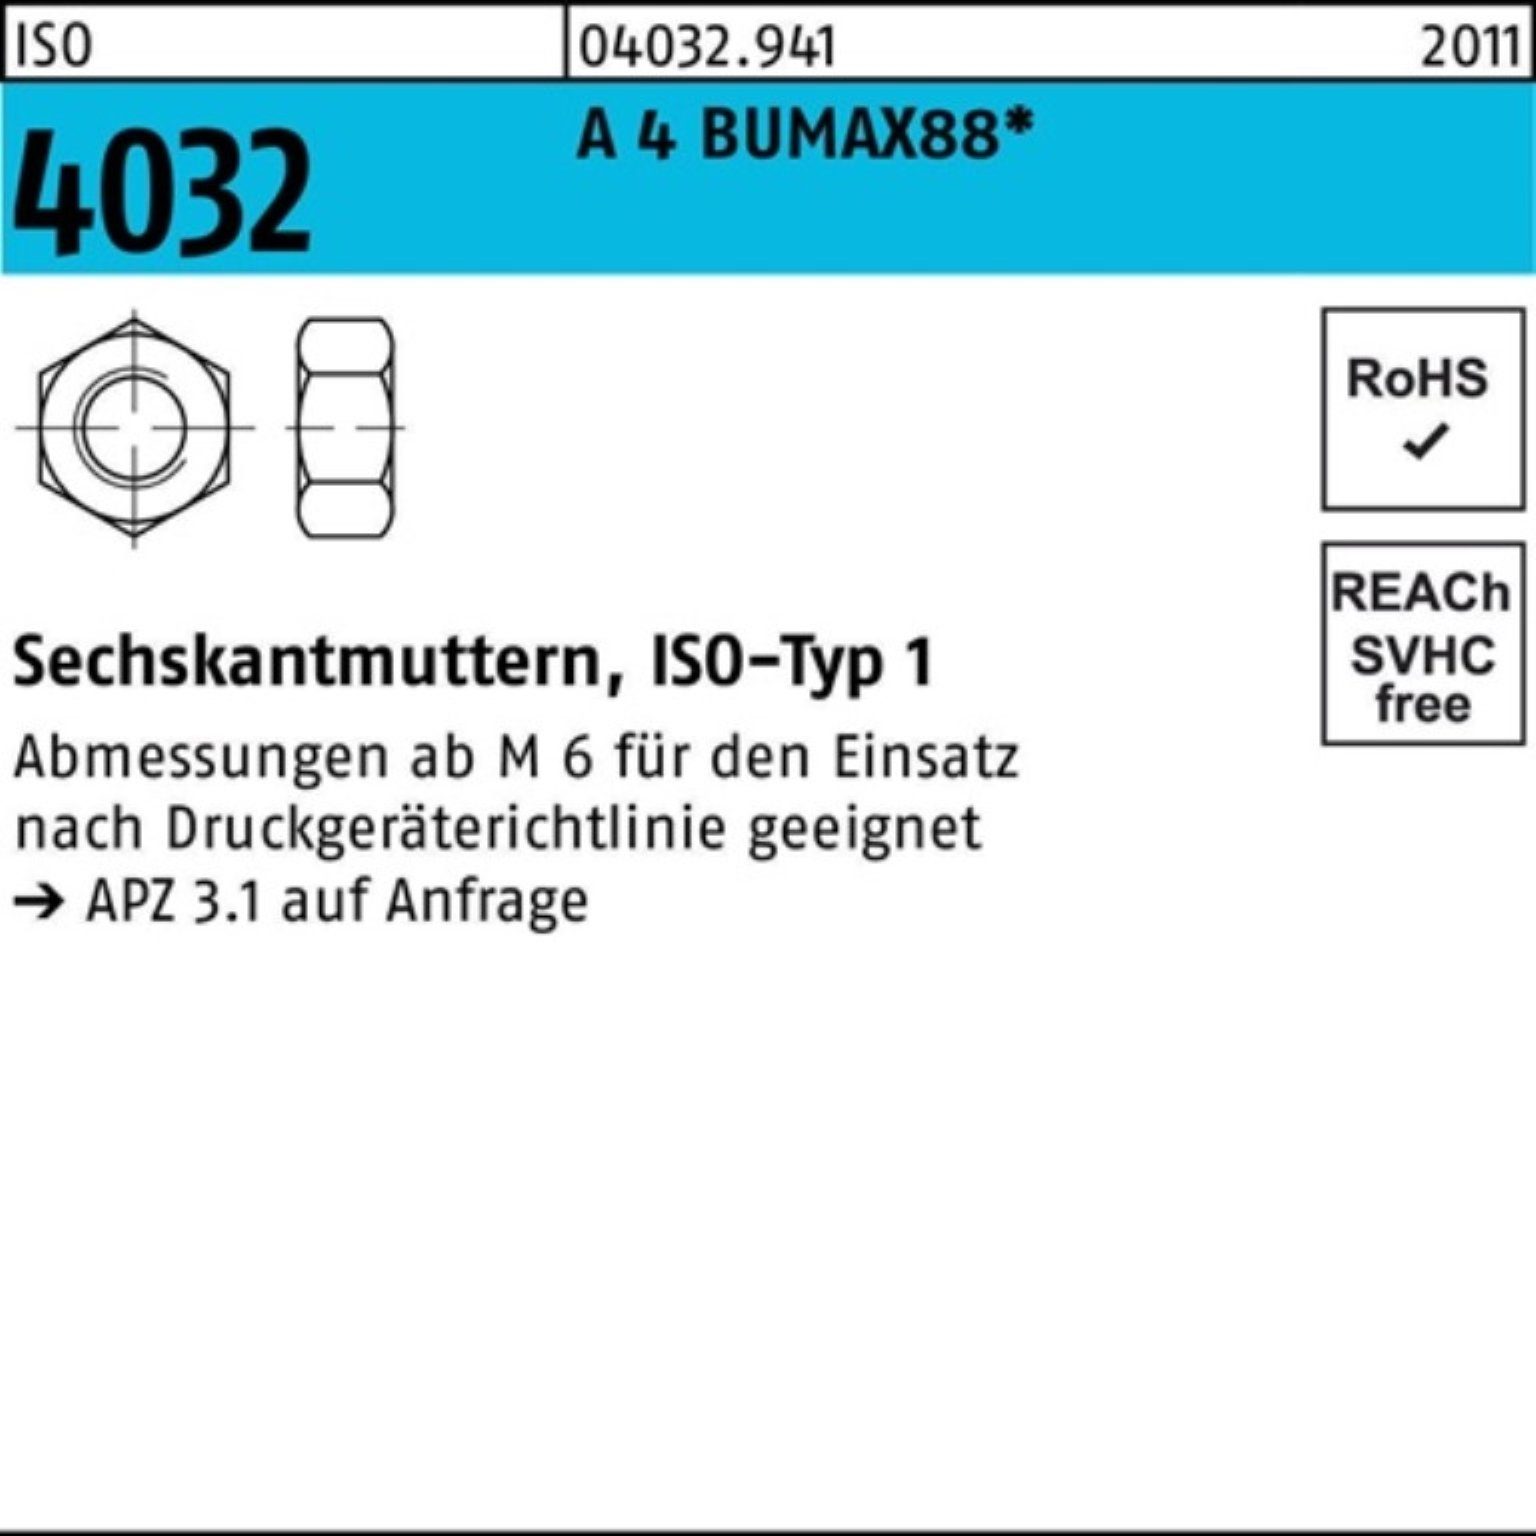 Bufab BUFAB ISO Sechskantmutter Pack IS 100er 4 Stück 4032 A M16 BUMAX88 Muttern 25